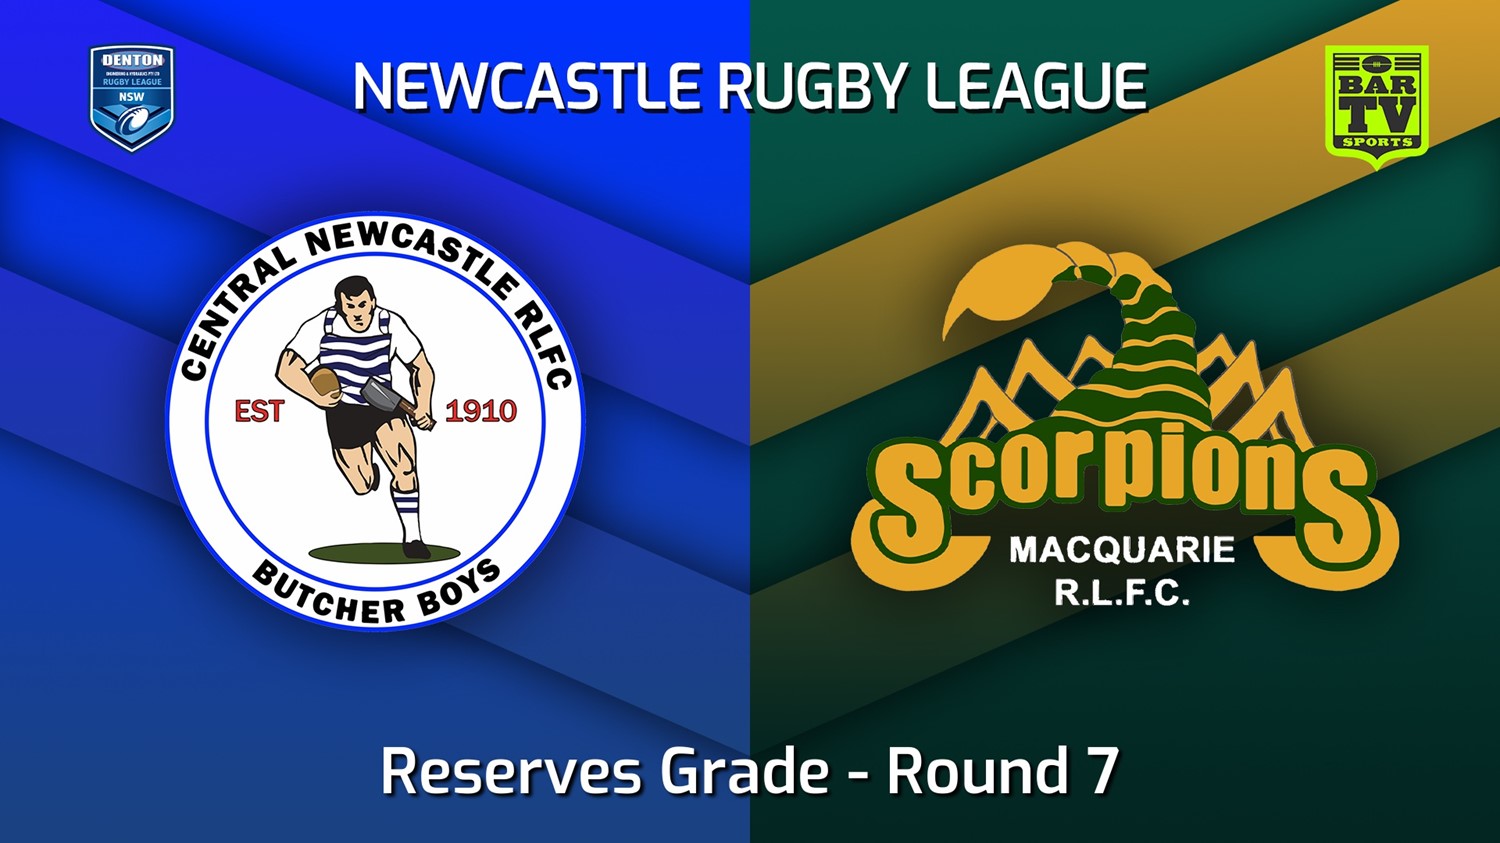 220508-Newcastle Round 7 - Reserves Grade - Central Newcastle v Macquarie Scorpions Slate Image